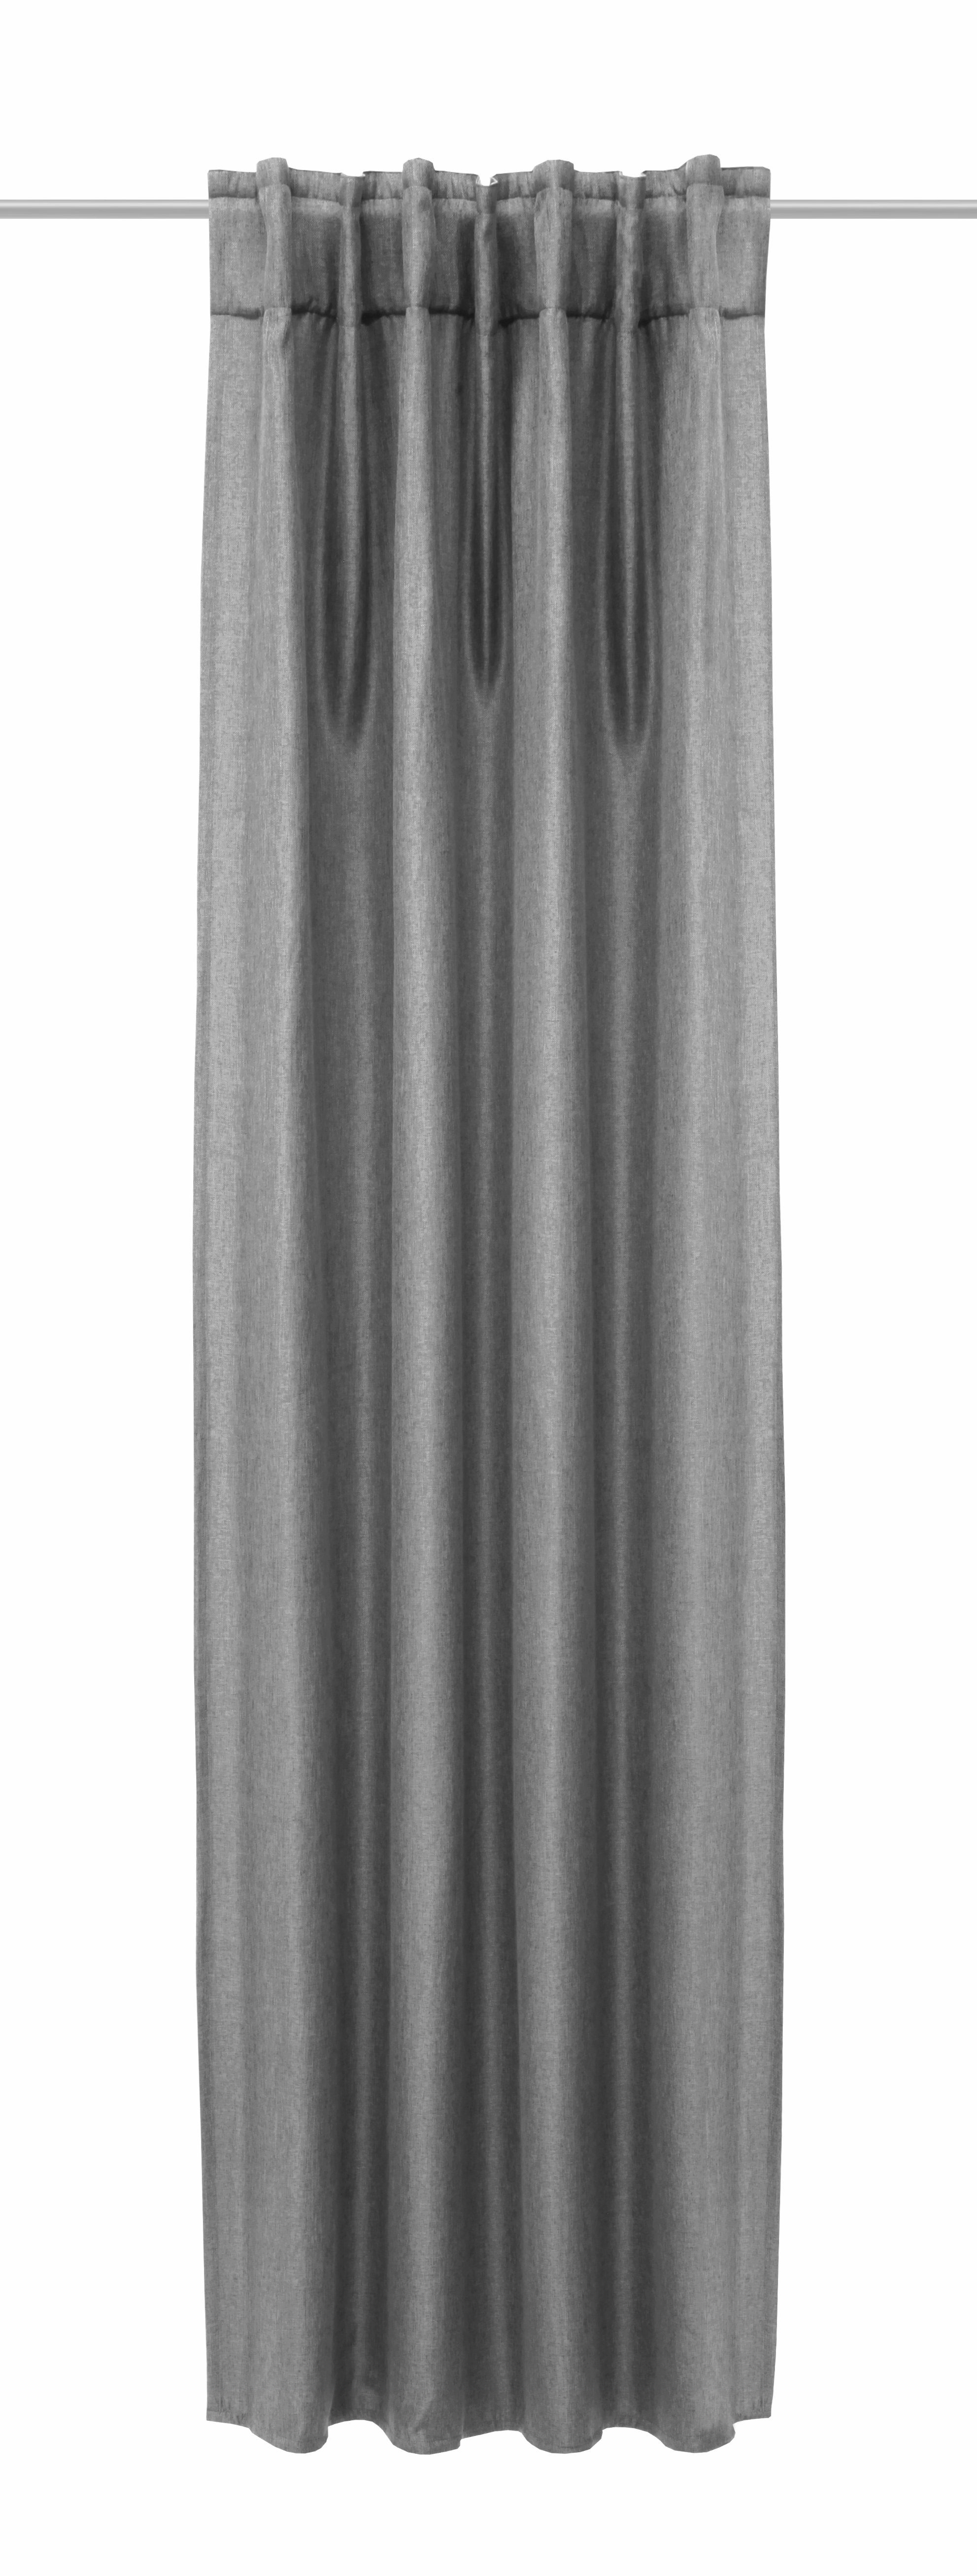 Verdunkelungsvorhang Clever-Kauf-24, Vorhang Jolie Verdunkelungsvorhang Leinenoptik, verdunkelnder grau